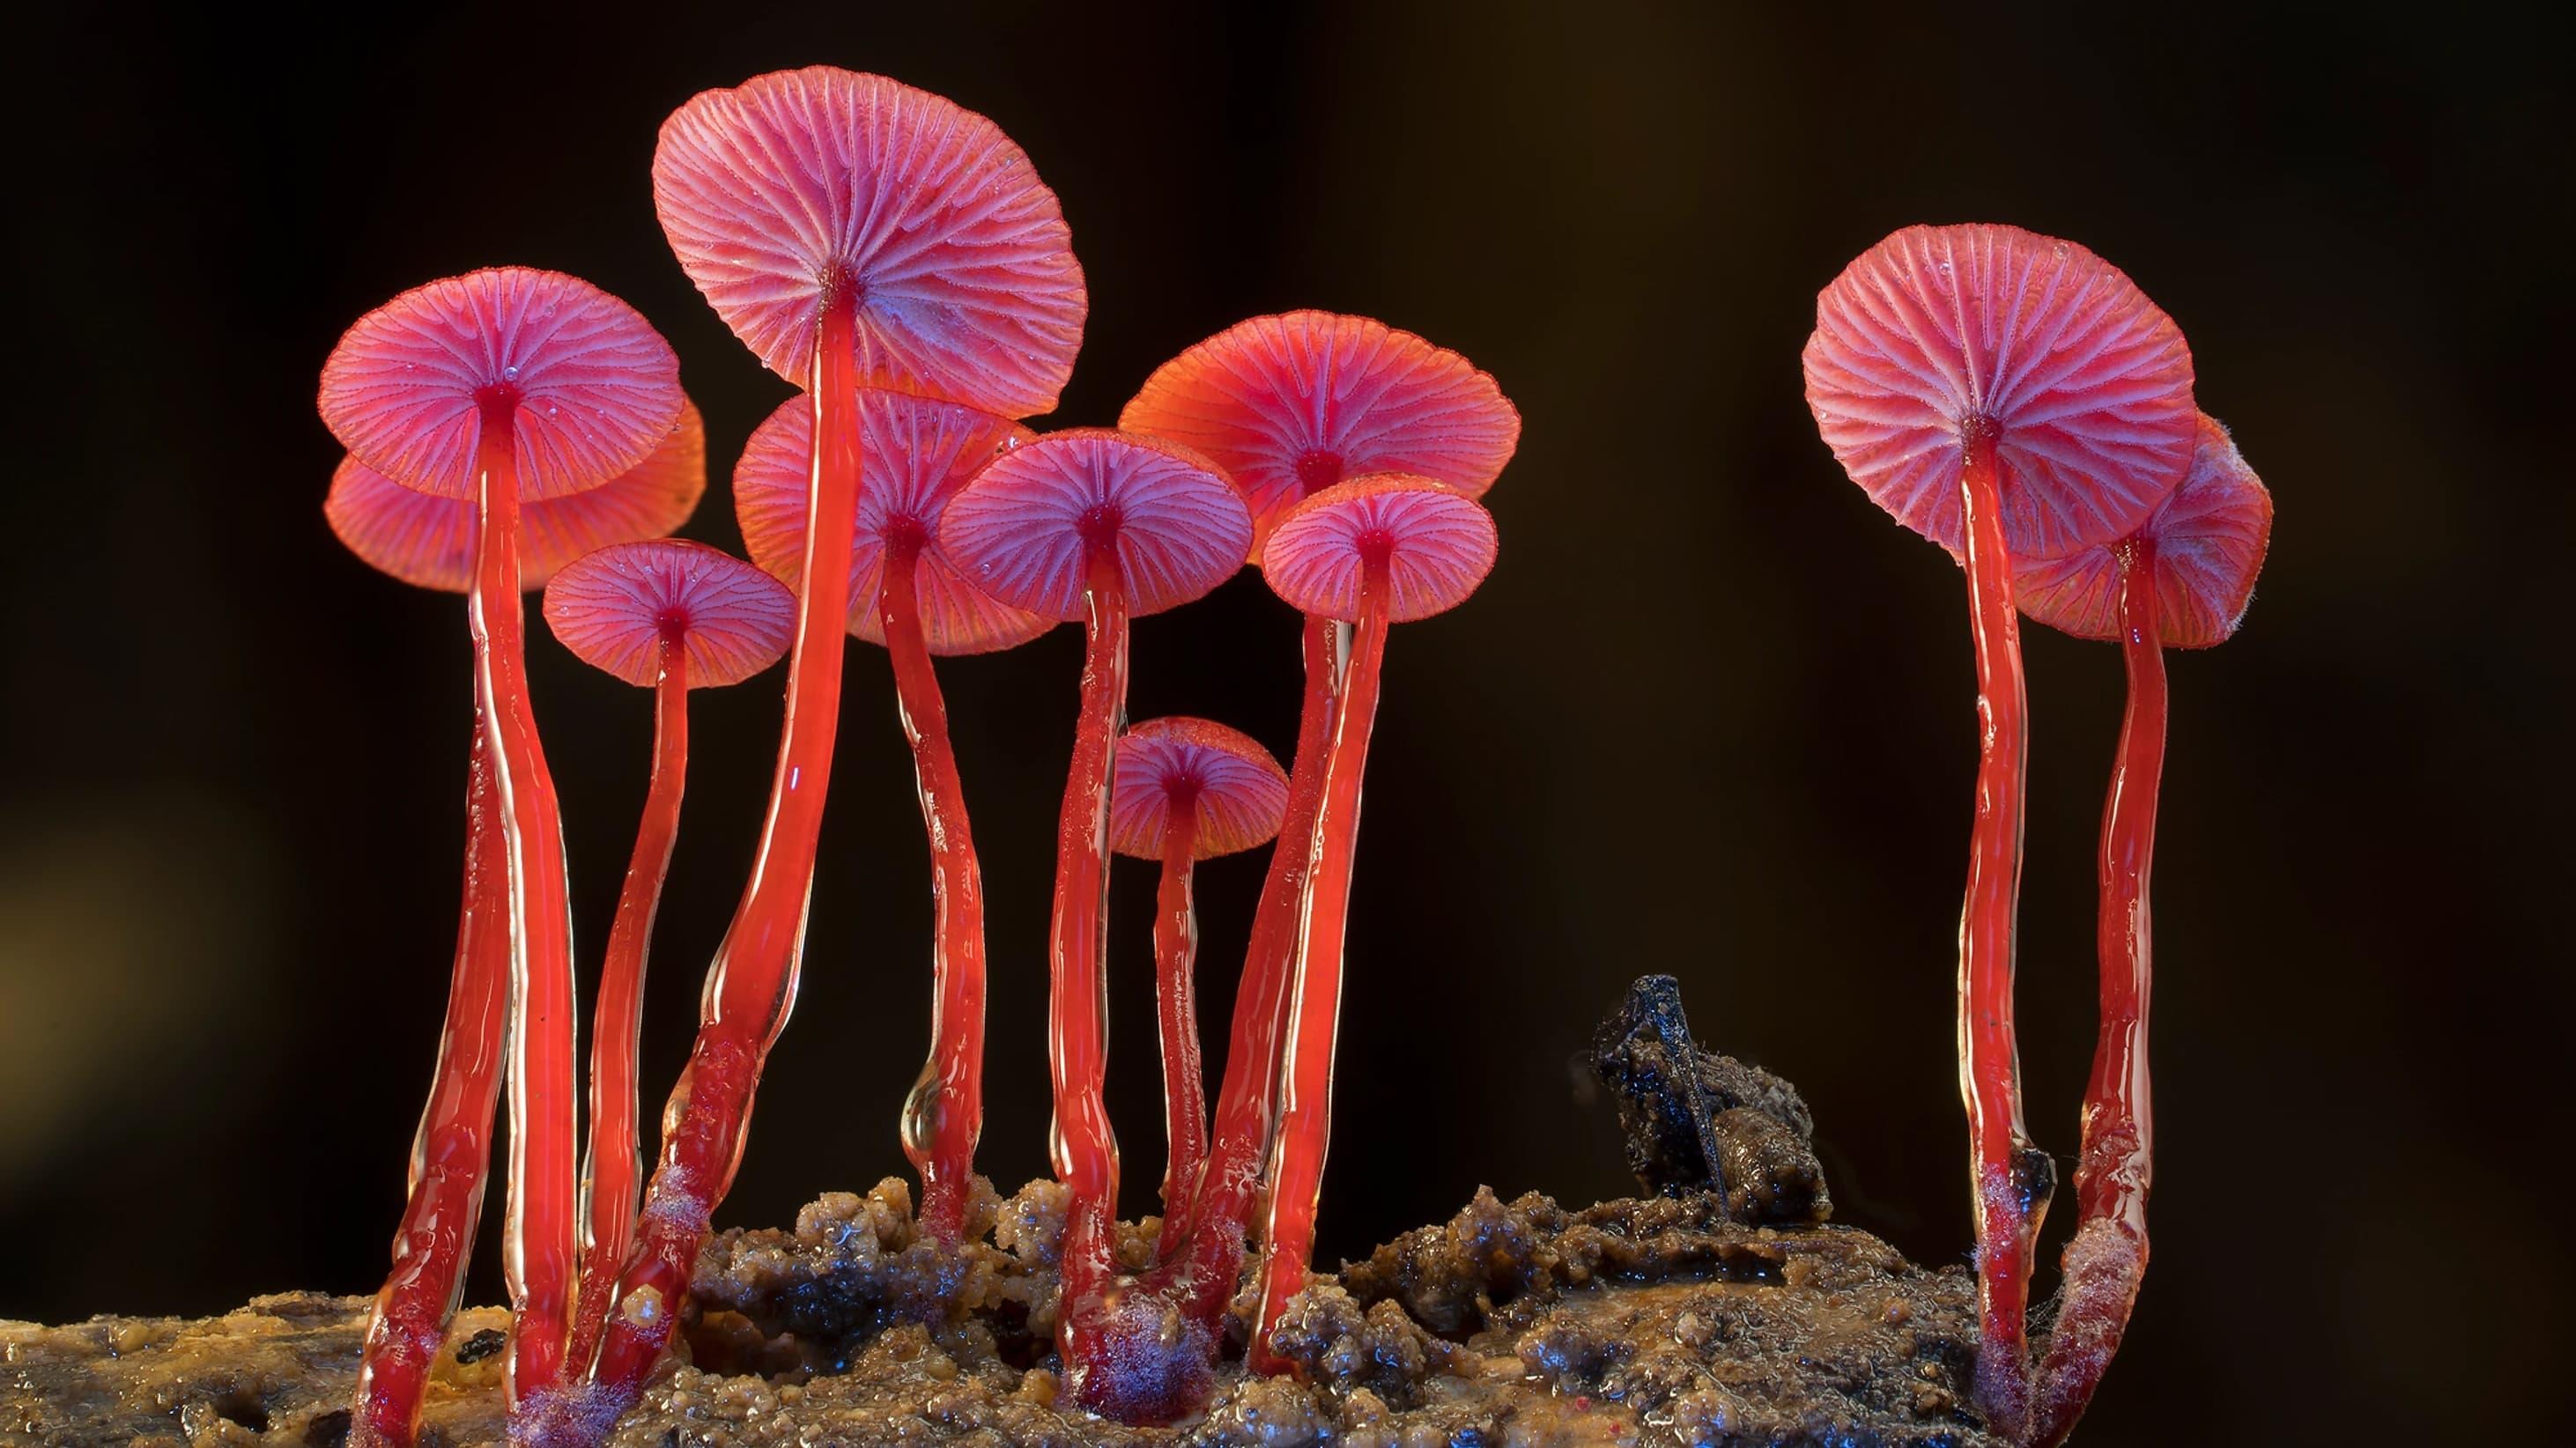 Fungi: The Web of Life backdrop